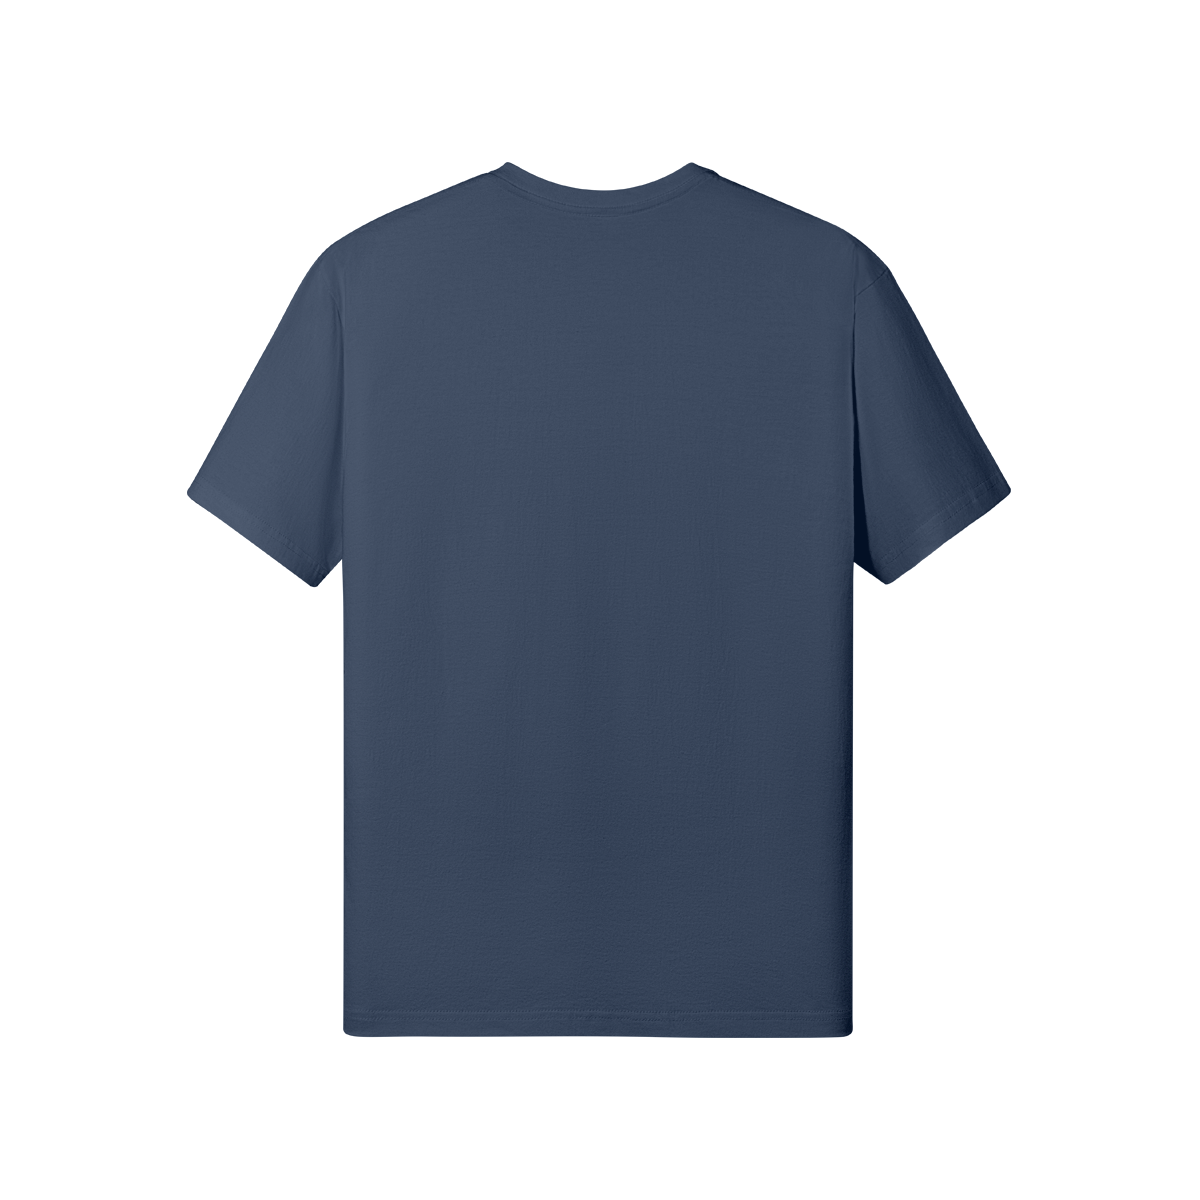 EMDAWG JDM - DATTO DRIFT CLUB Unisex Classic Fit Crew Neck T-shirt